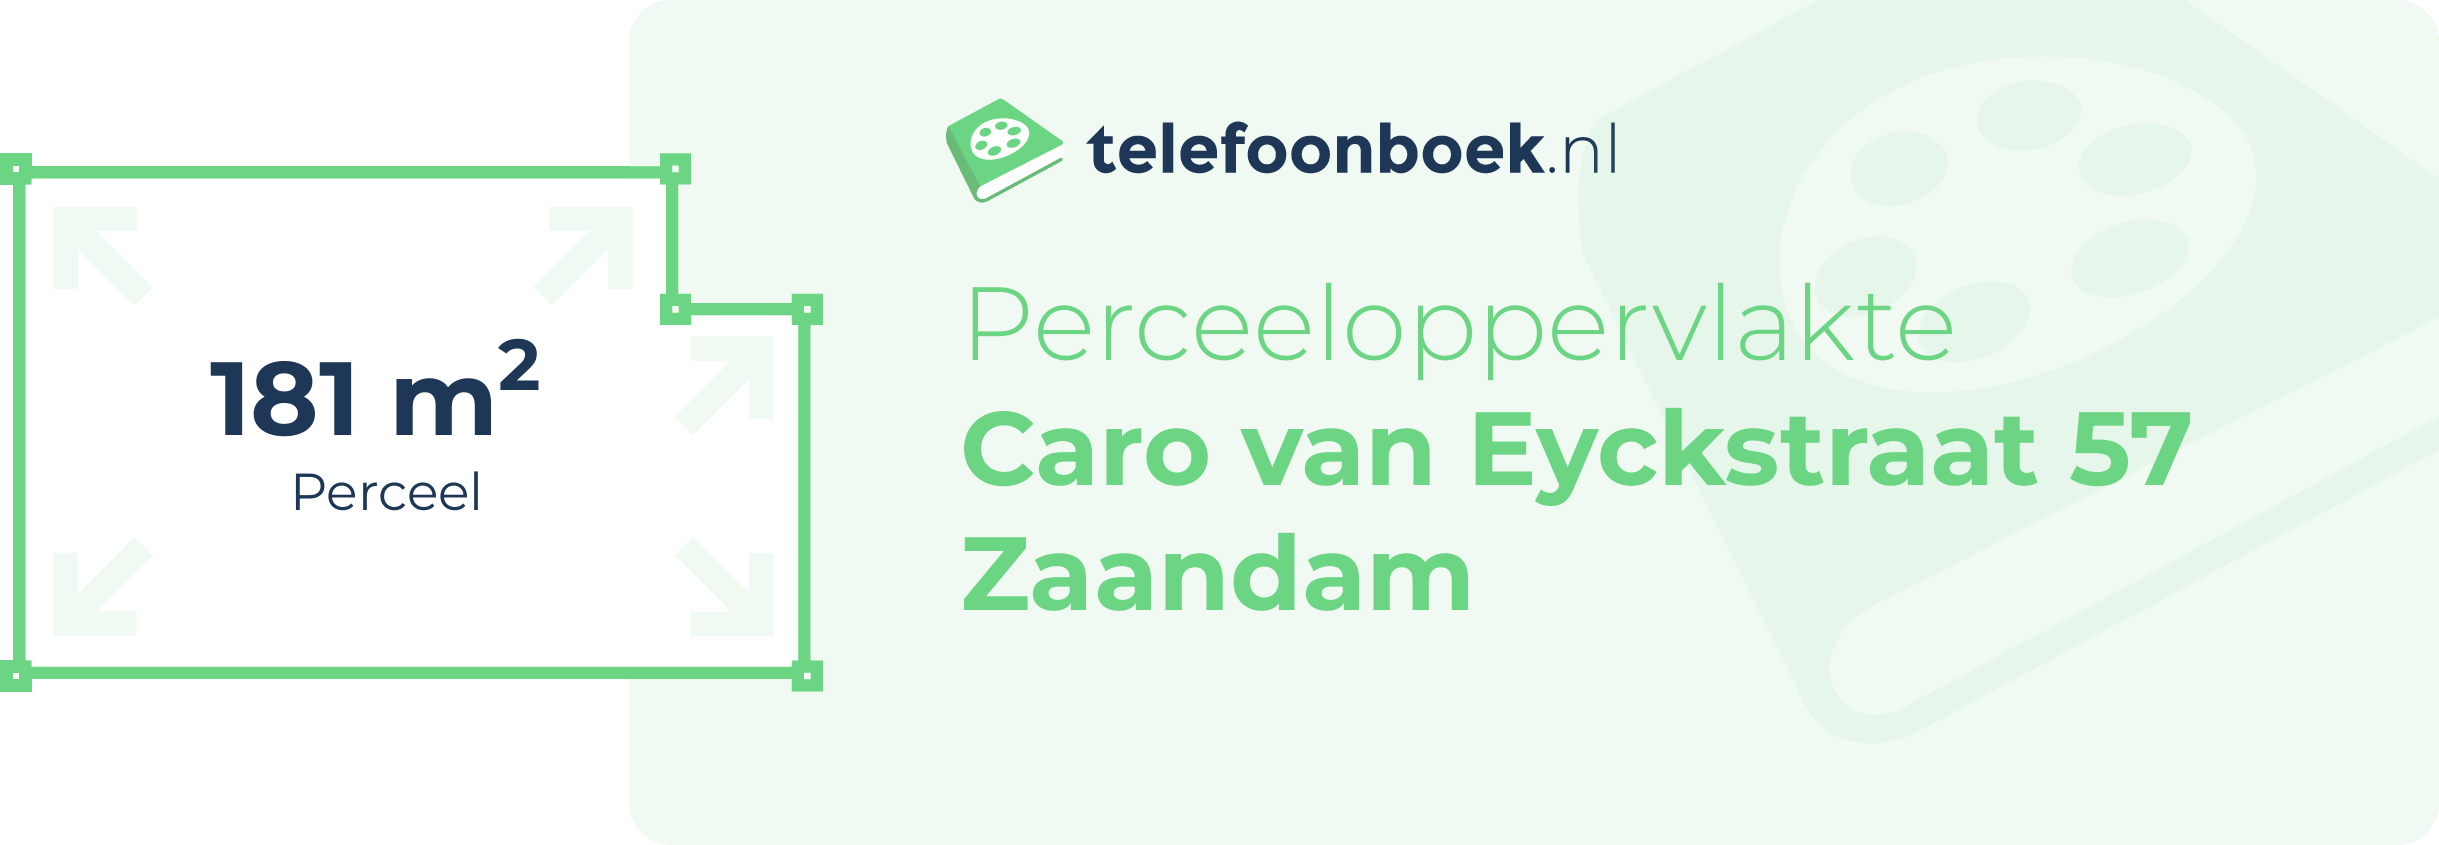 Perceeloppervlakte Caro Van Eyckstraat 57 Zaandam